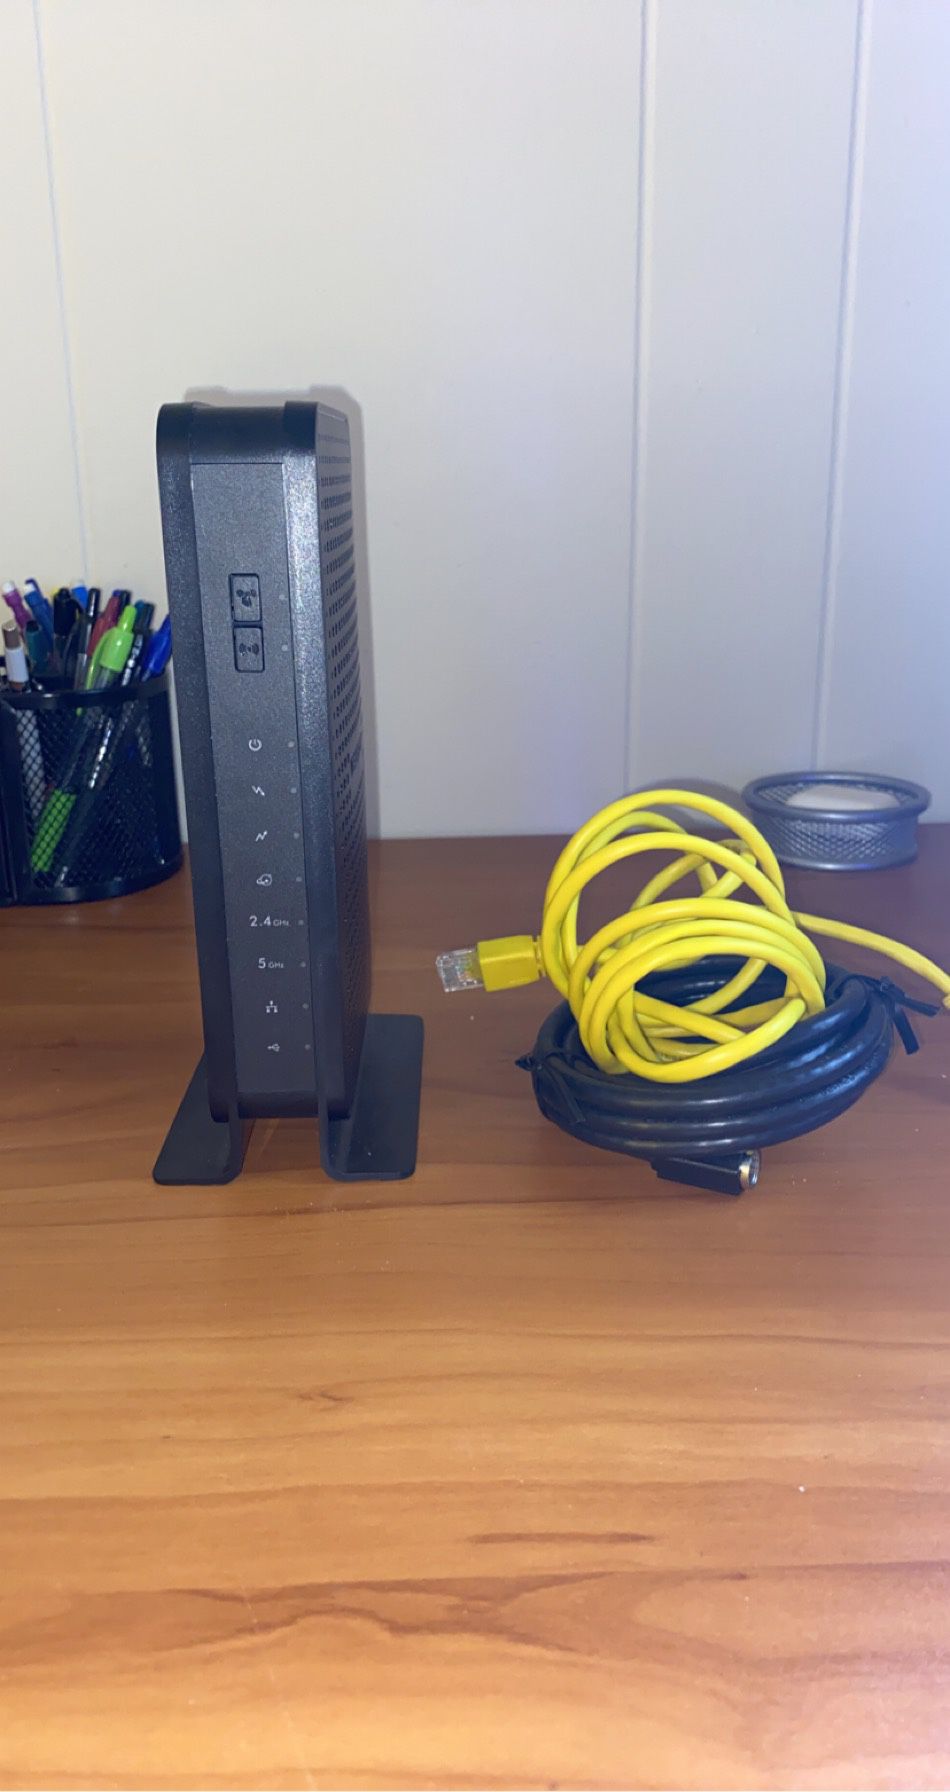 NETGEAR N600 WiFi Cable Modem Router (C3700)